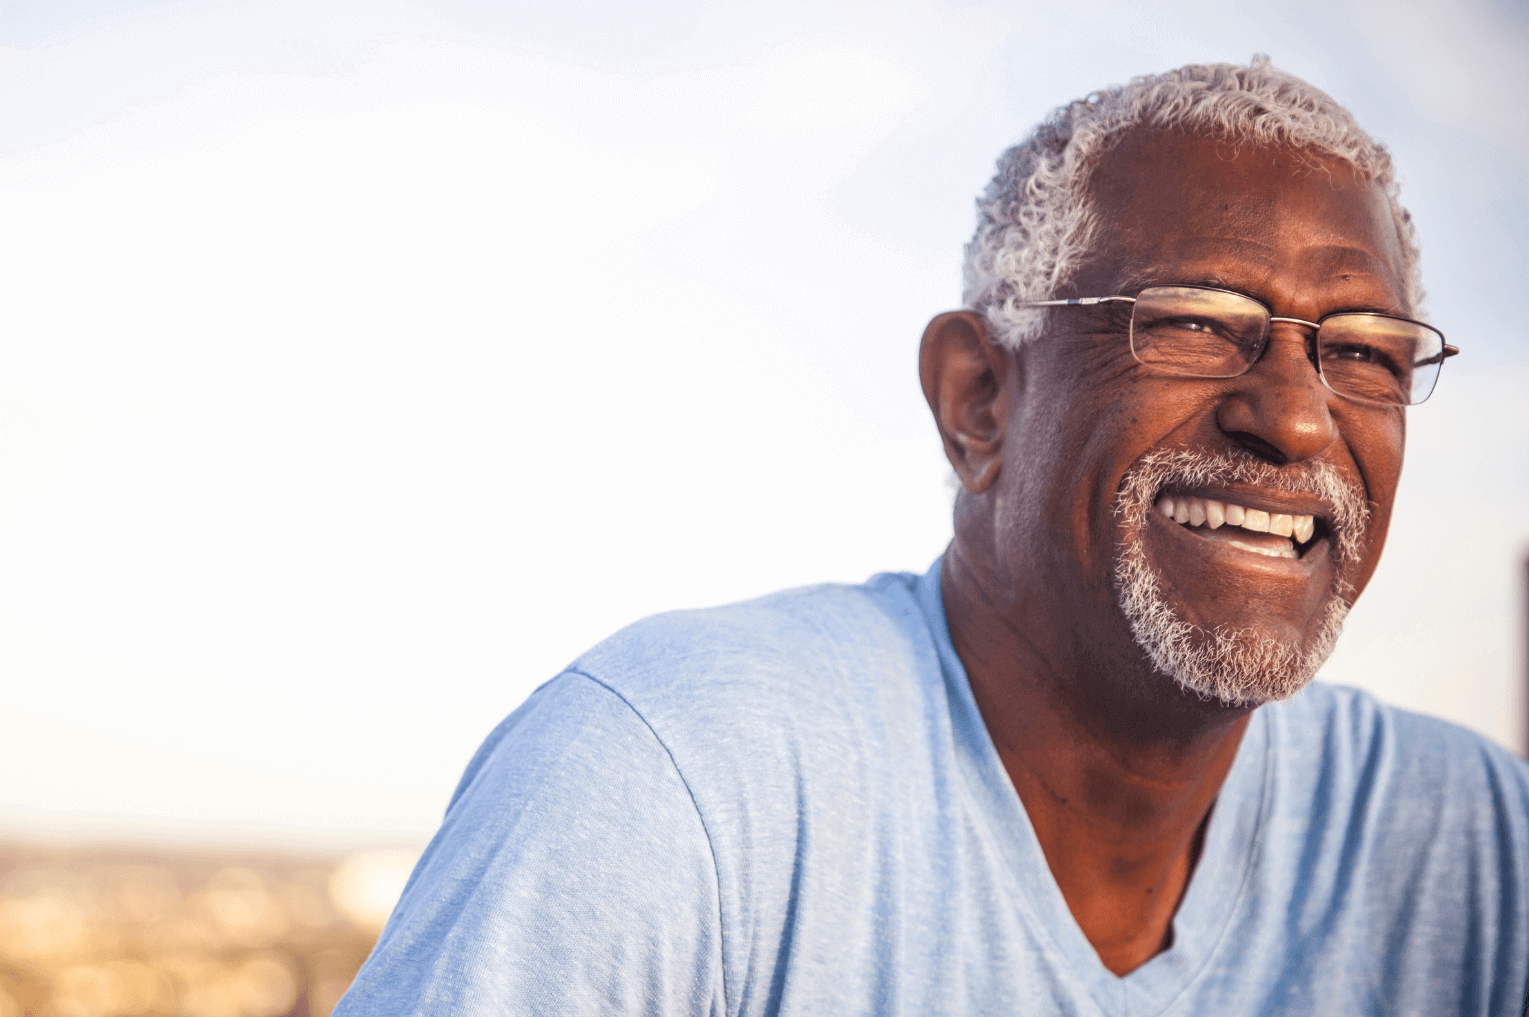 Elderly man smiling showing his dental implants